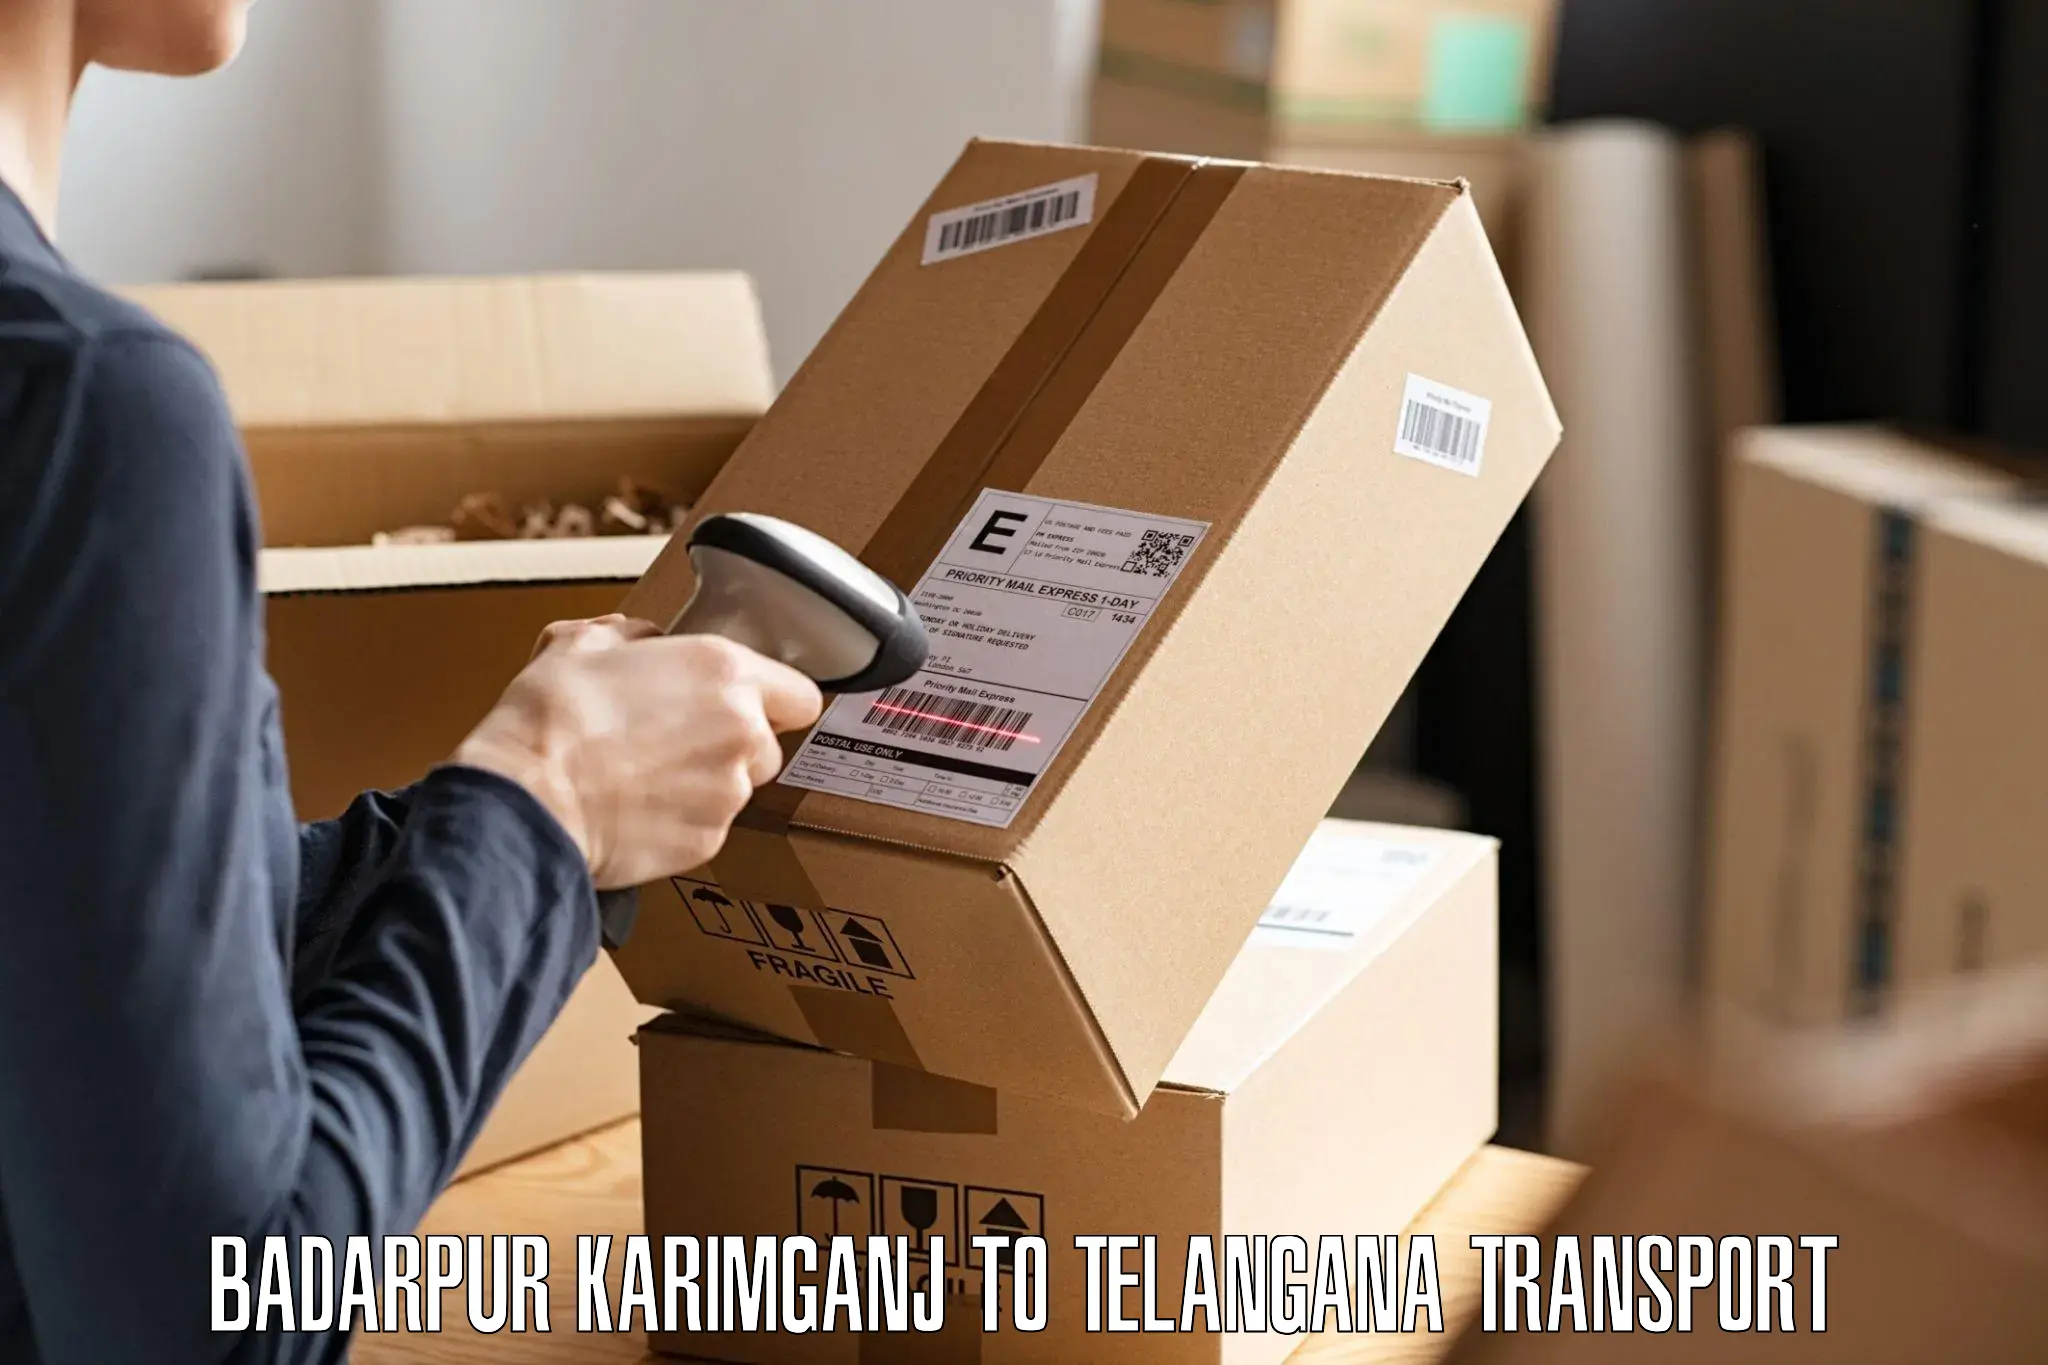 Online transport service Badarpur Karimganj to Manthani